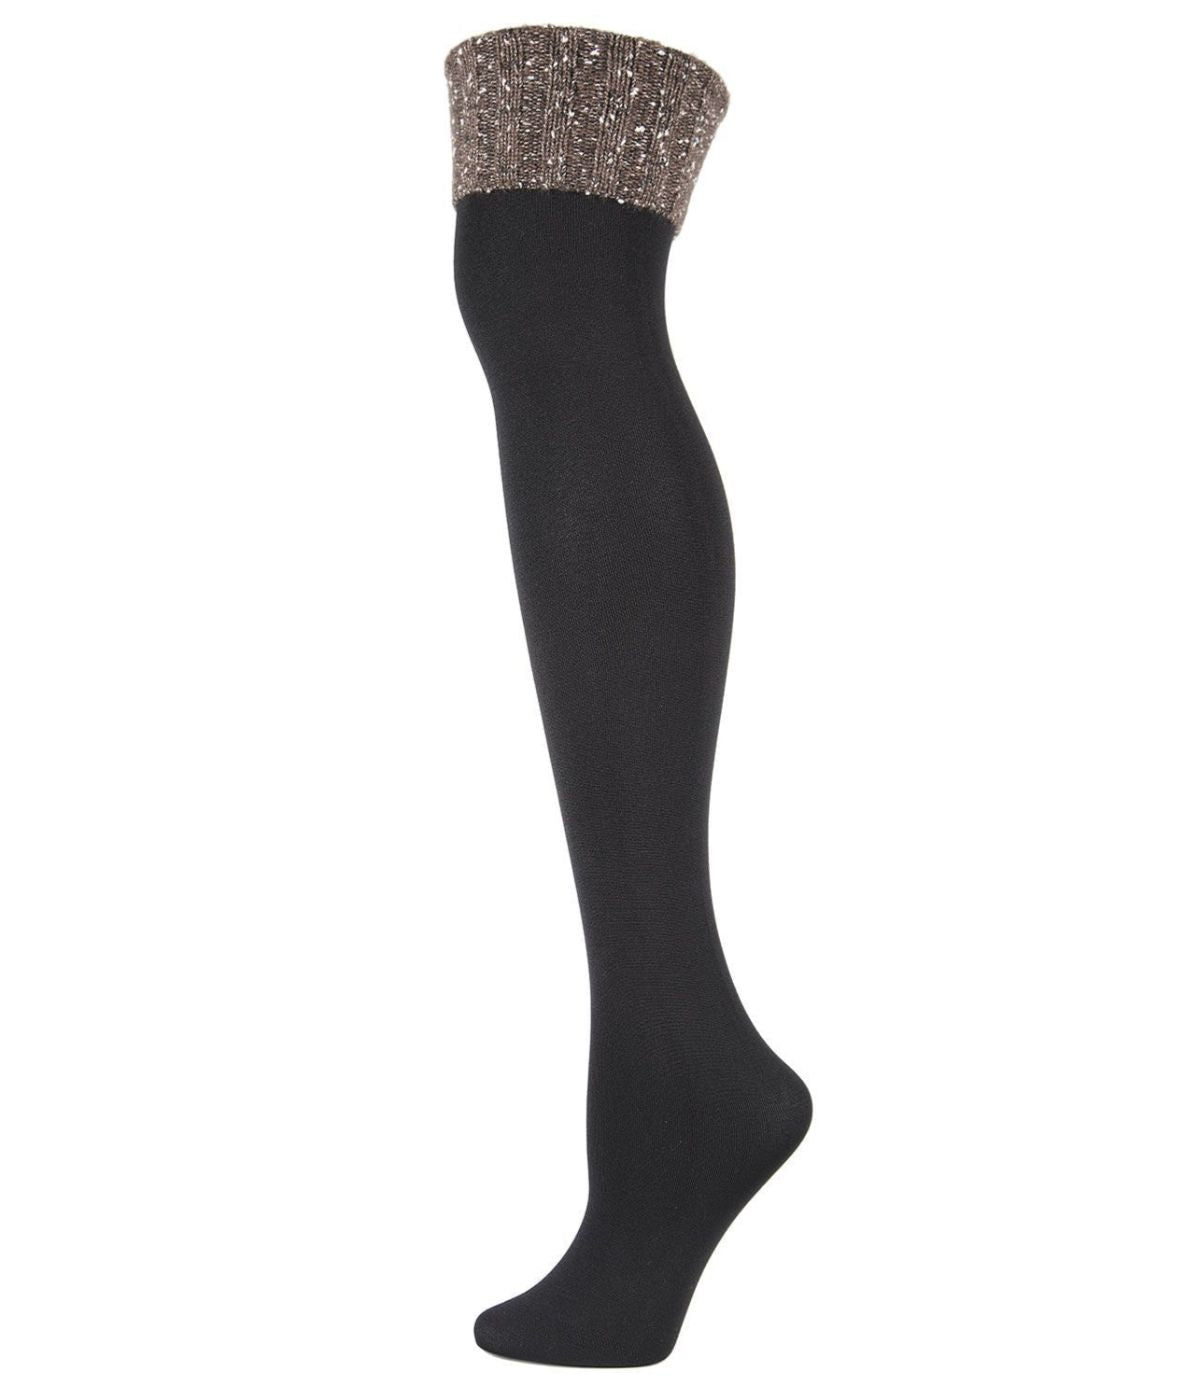 Big Marled Rib Fleece Lined Over The Knee Socks Black-Gray